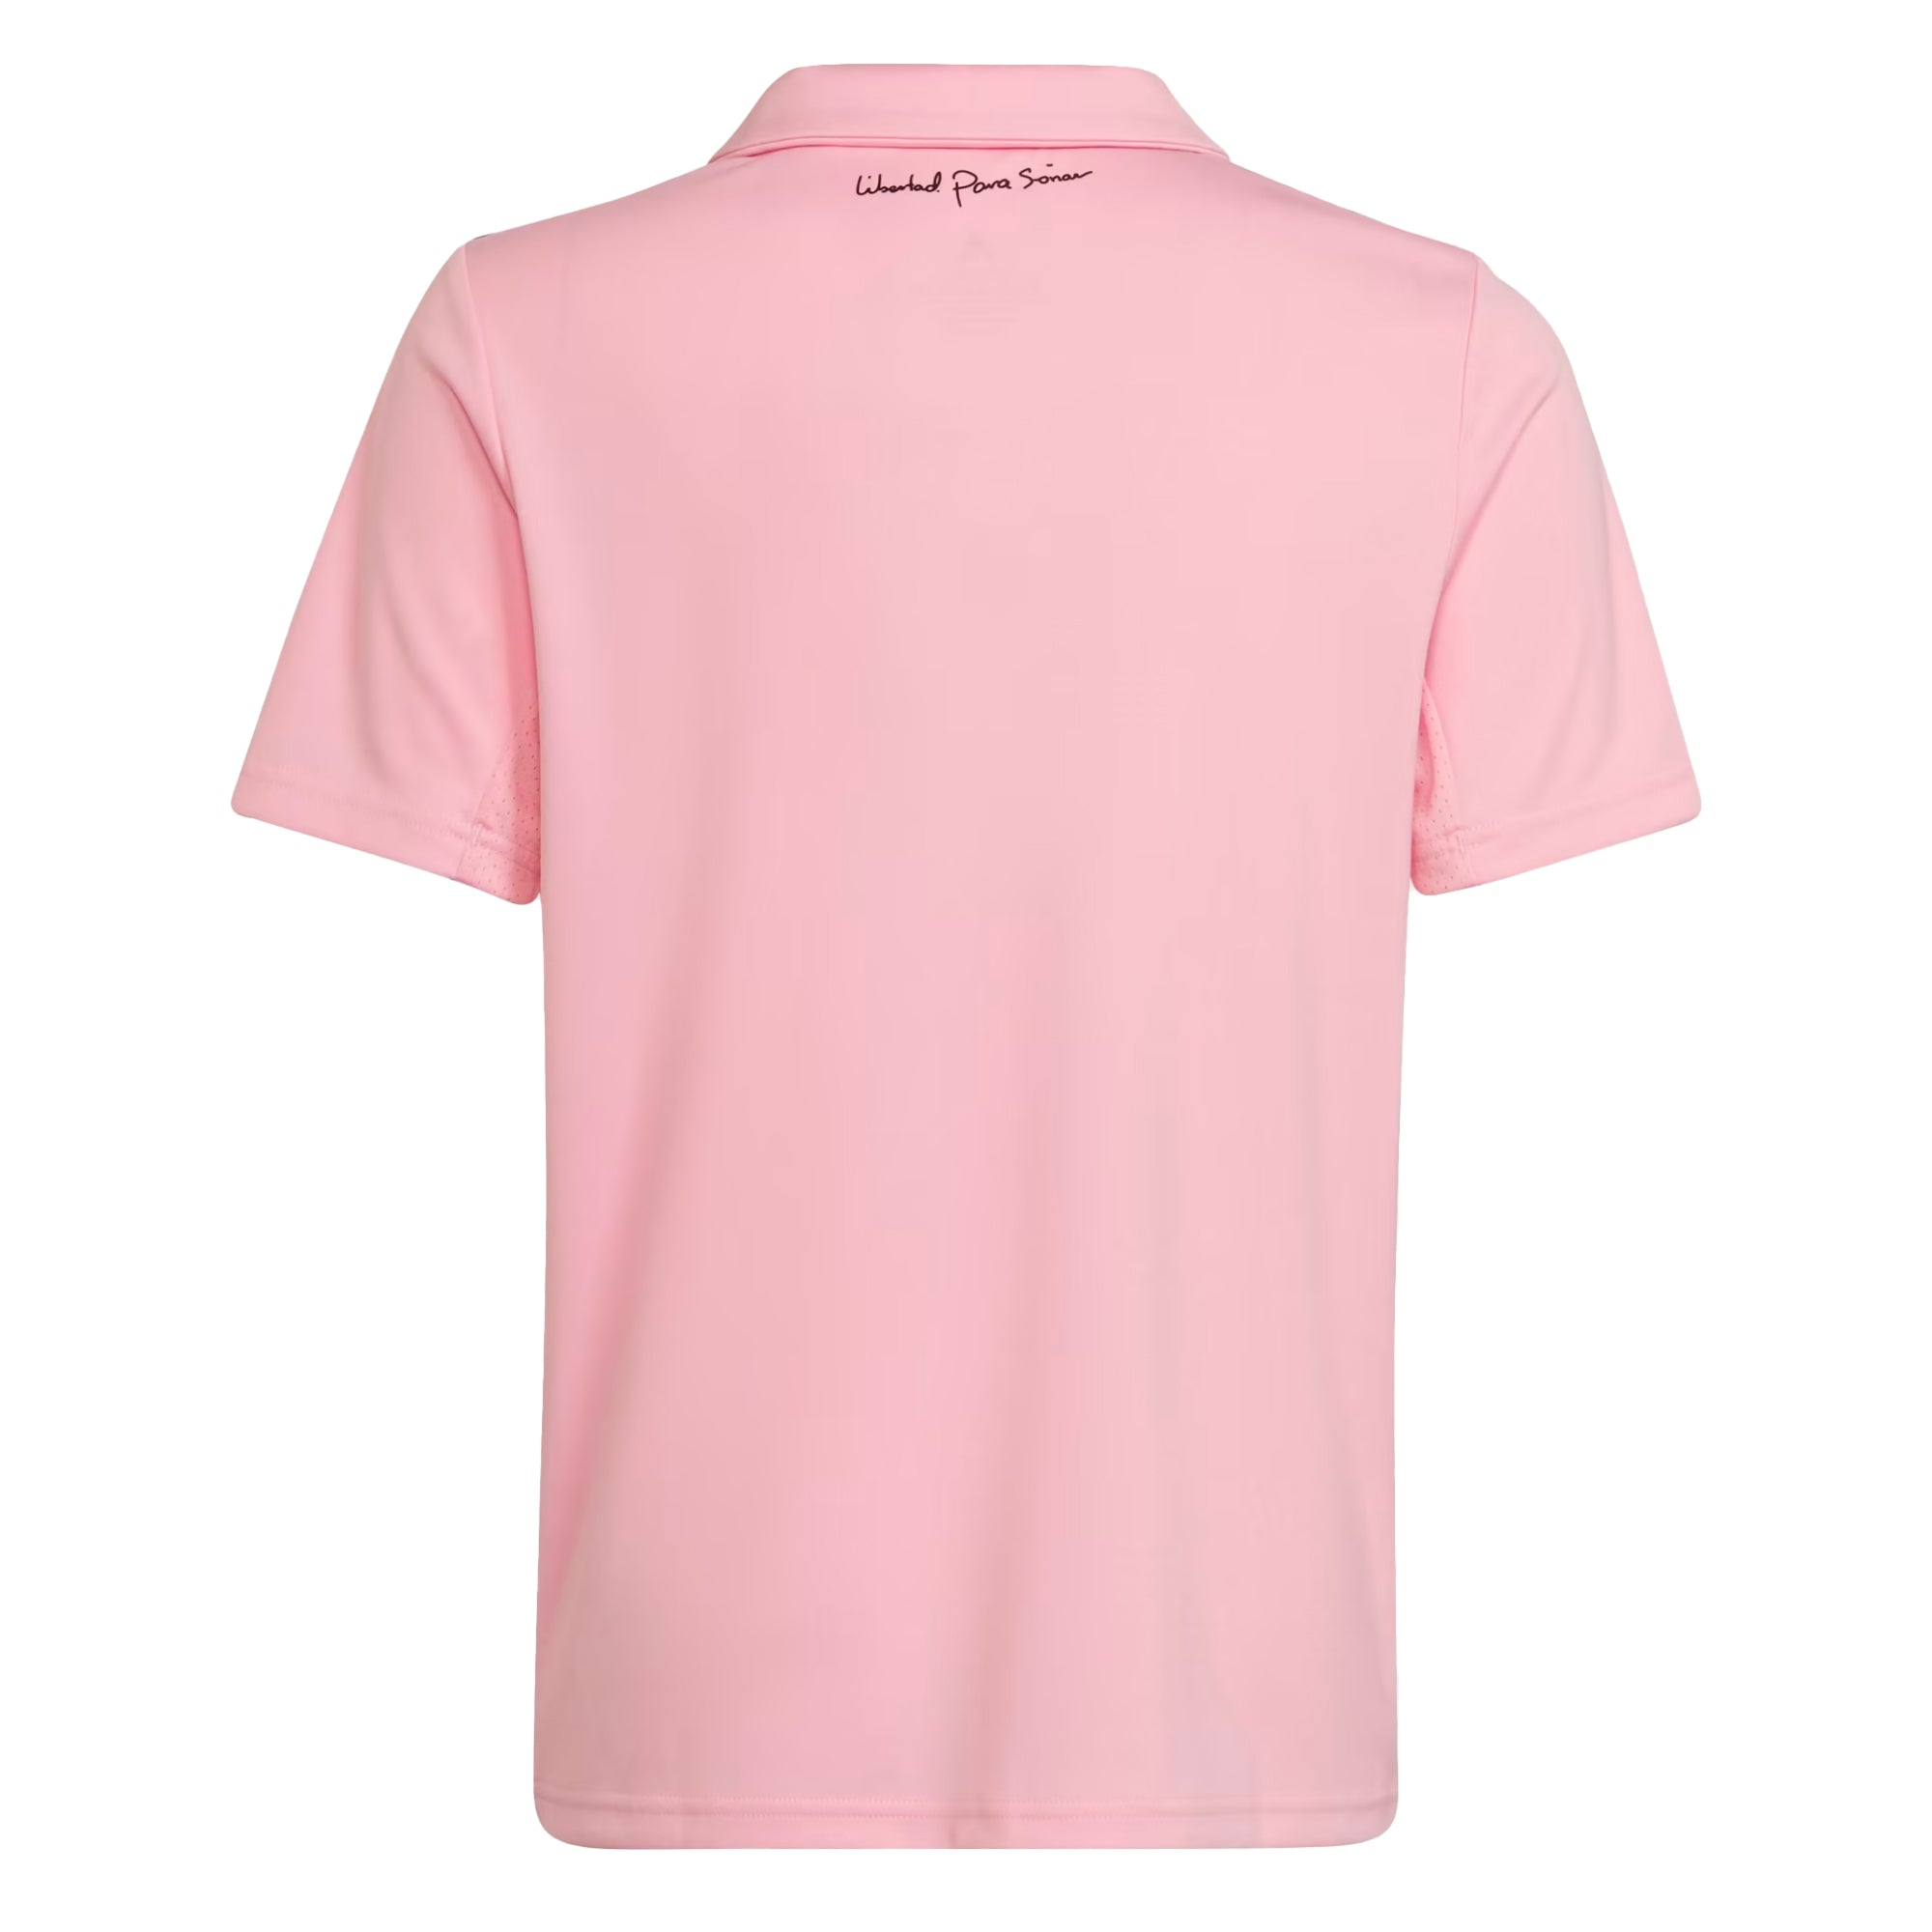 2022/23 Inter Miami Home Pink Vest Jersey